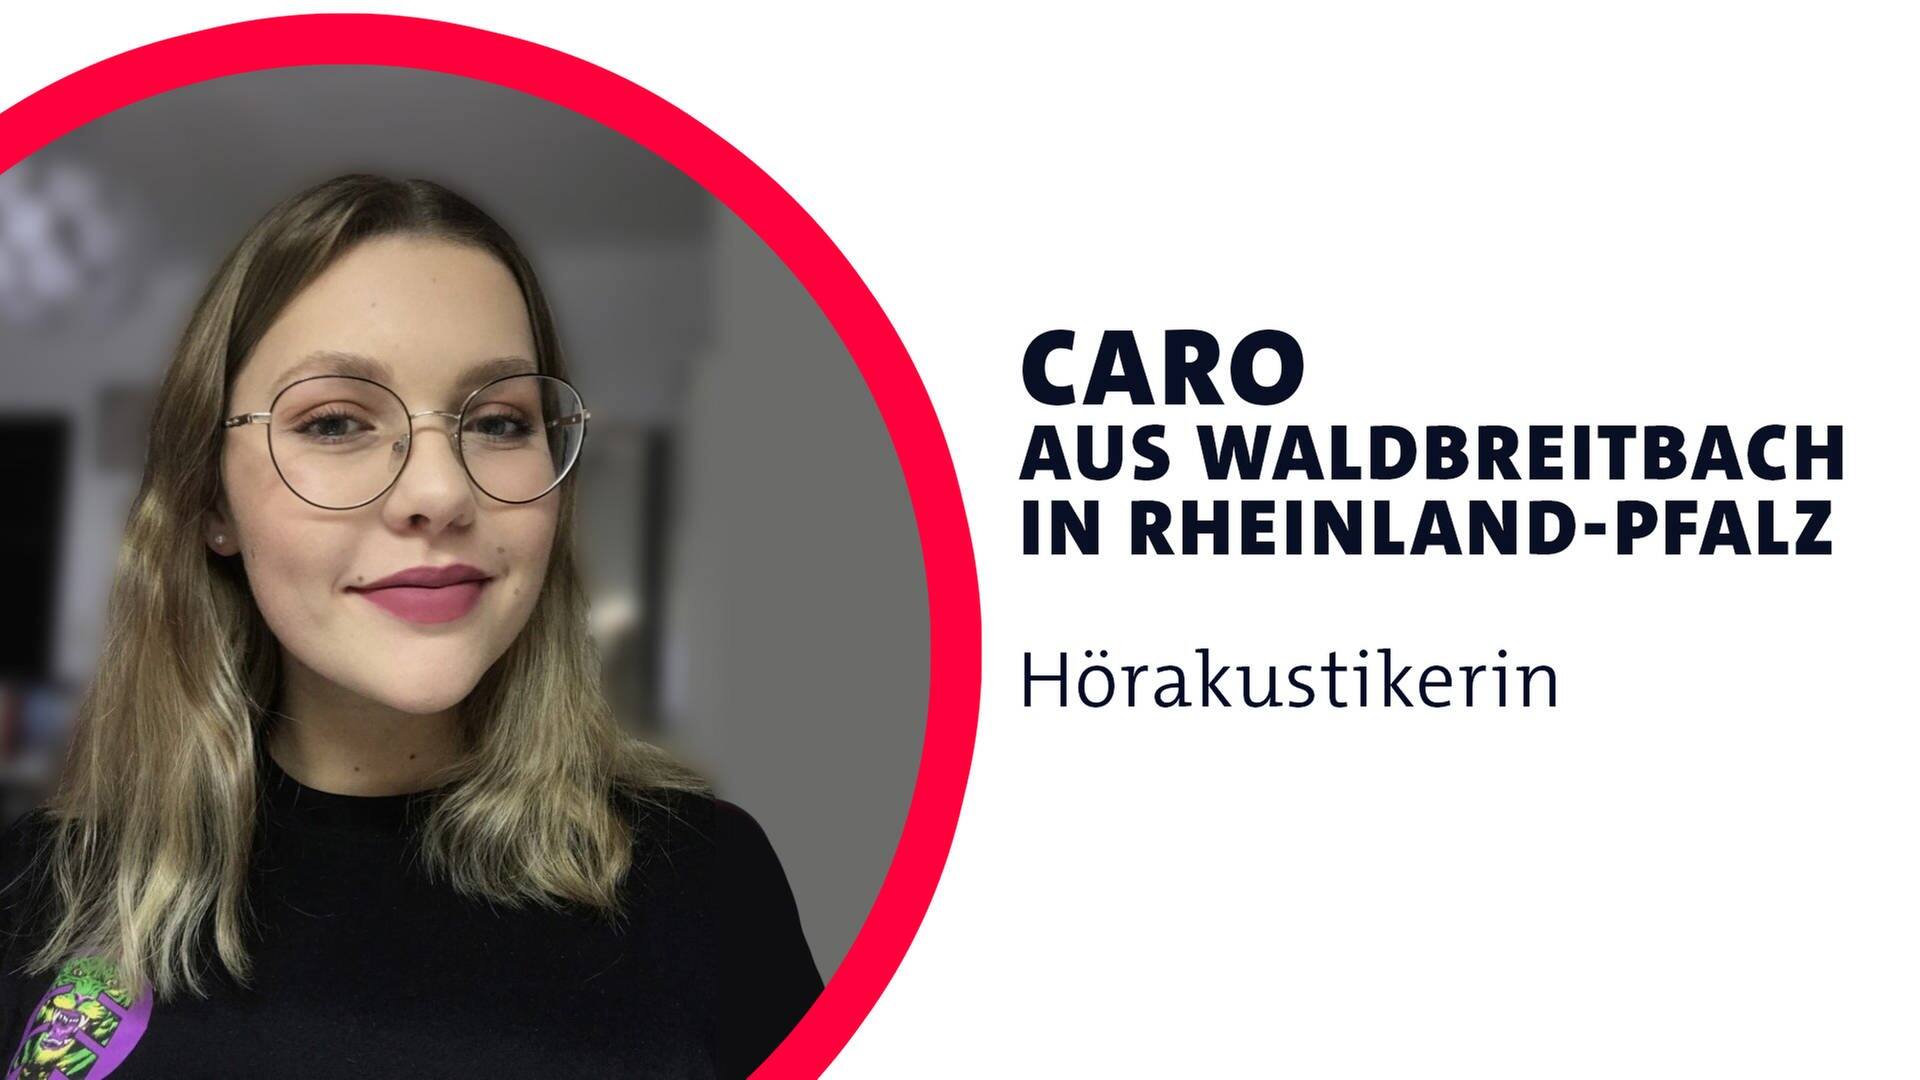 Caro aus Rheinland-Pfalz ist Hörakustikerin (Foto: SWR3, Carolin Haag)